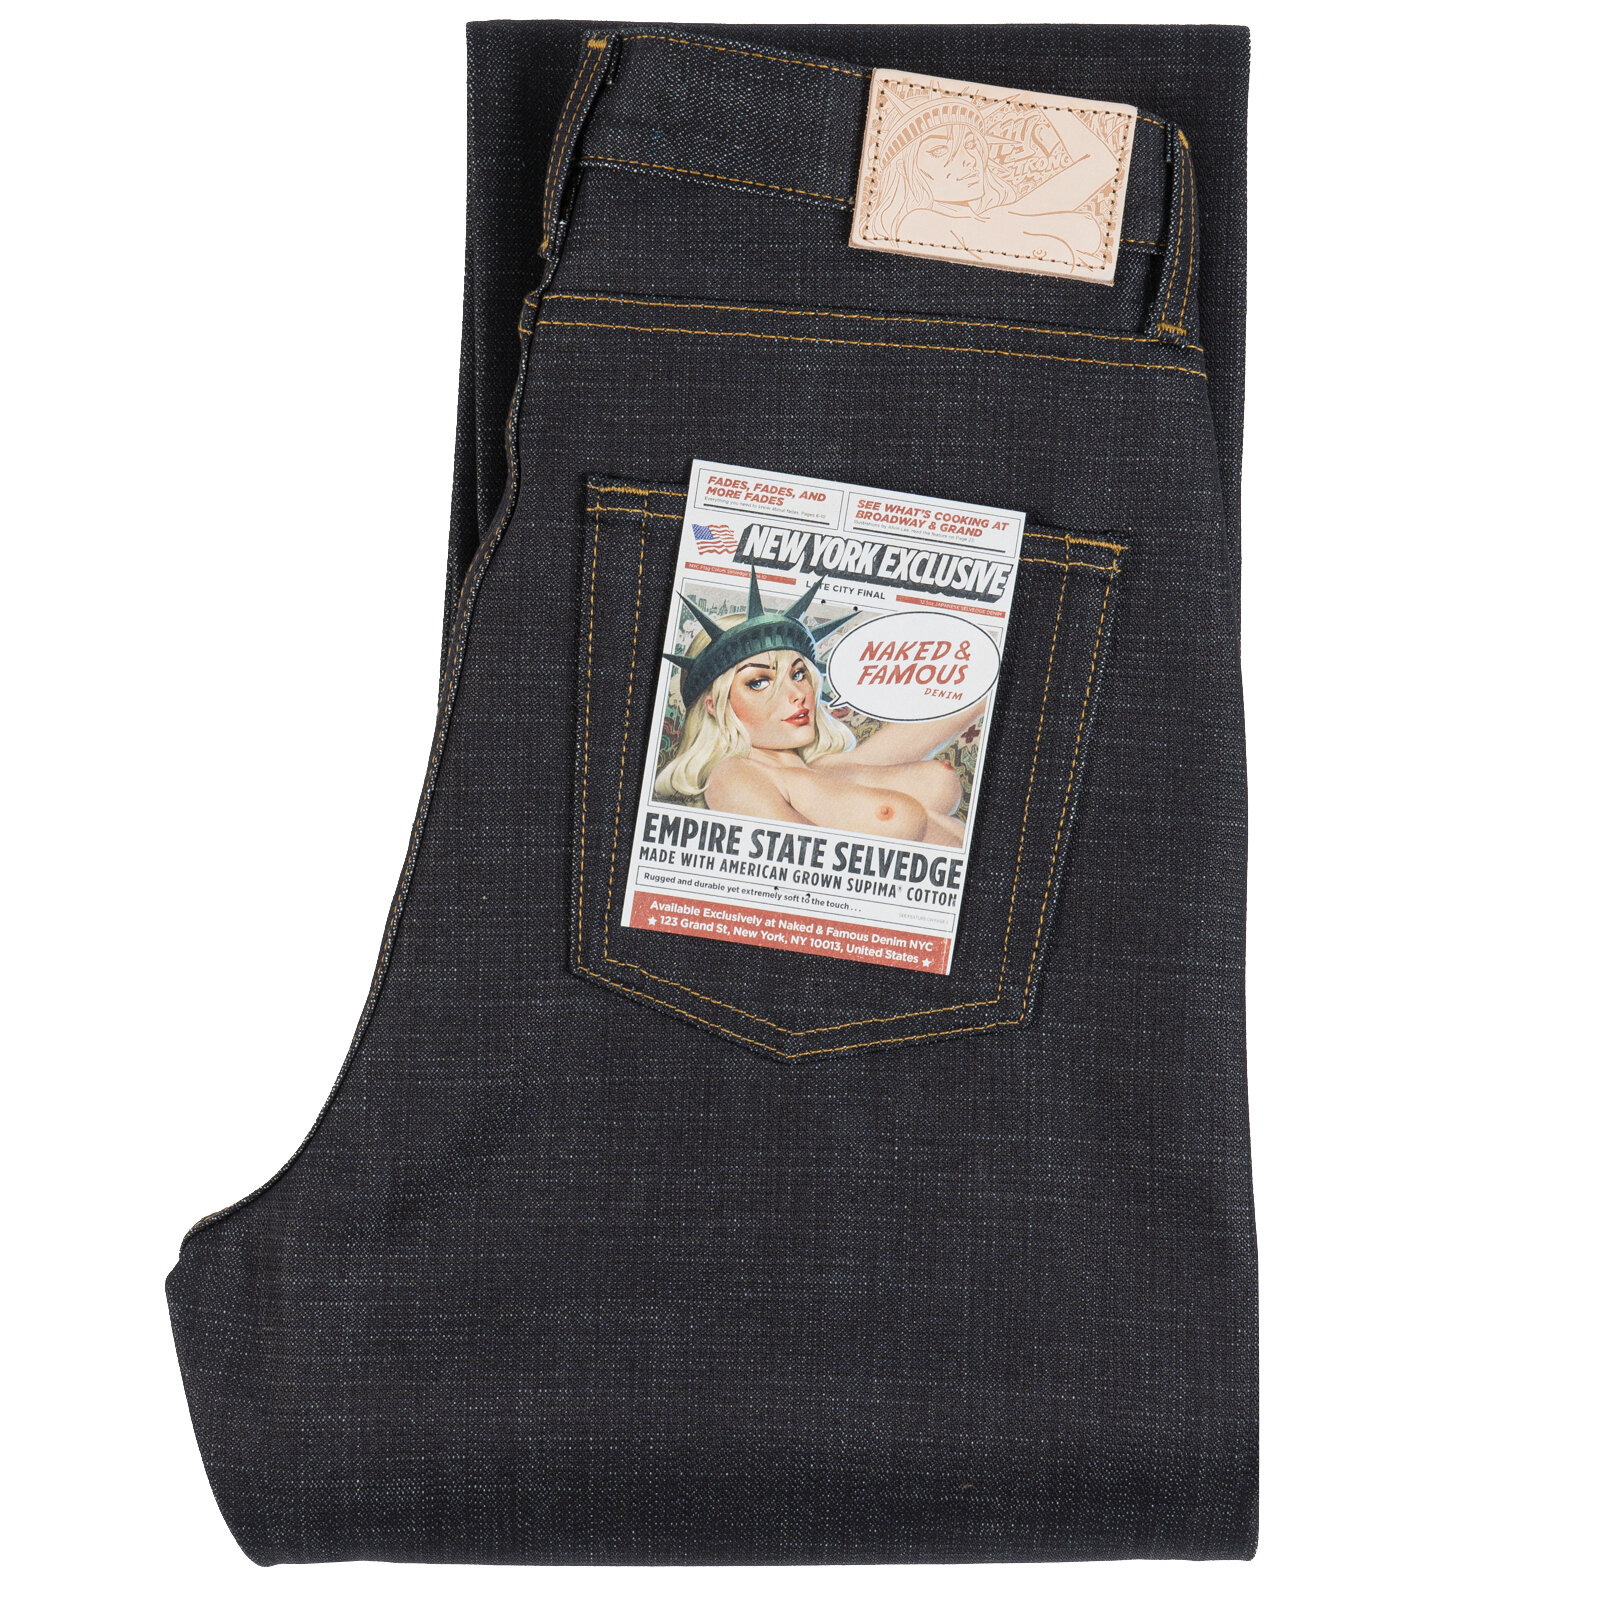  Women’s Empire State Selvedge jeans - folded 